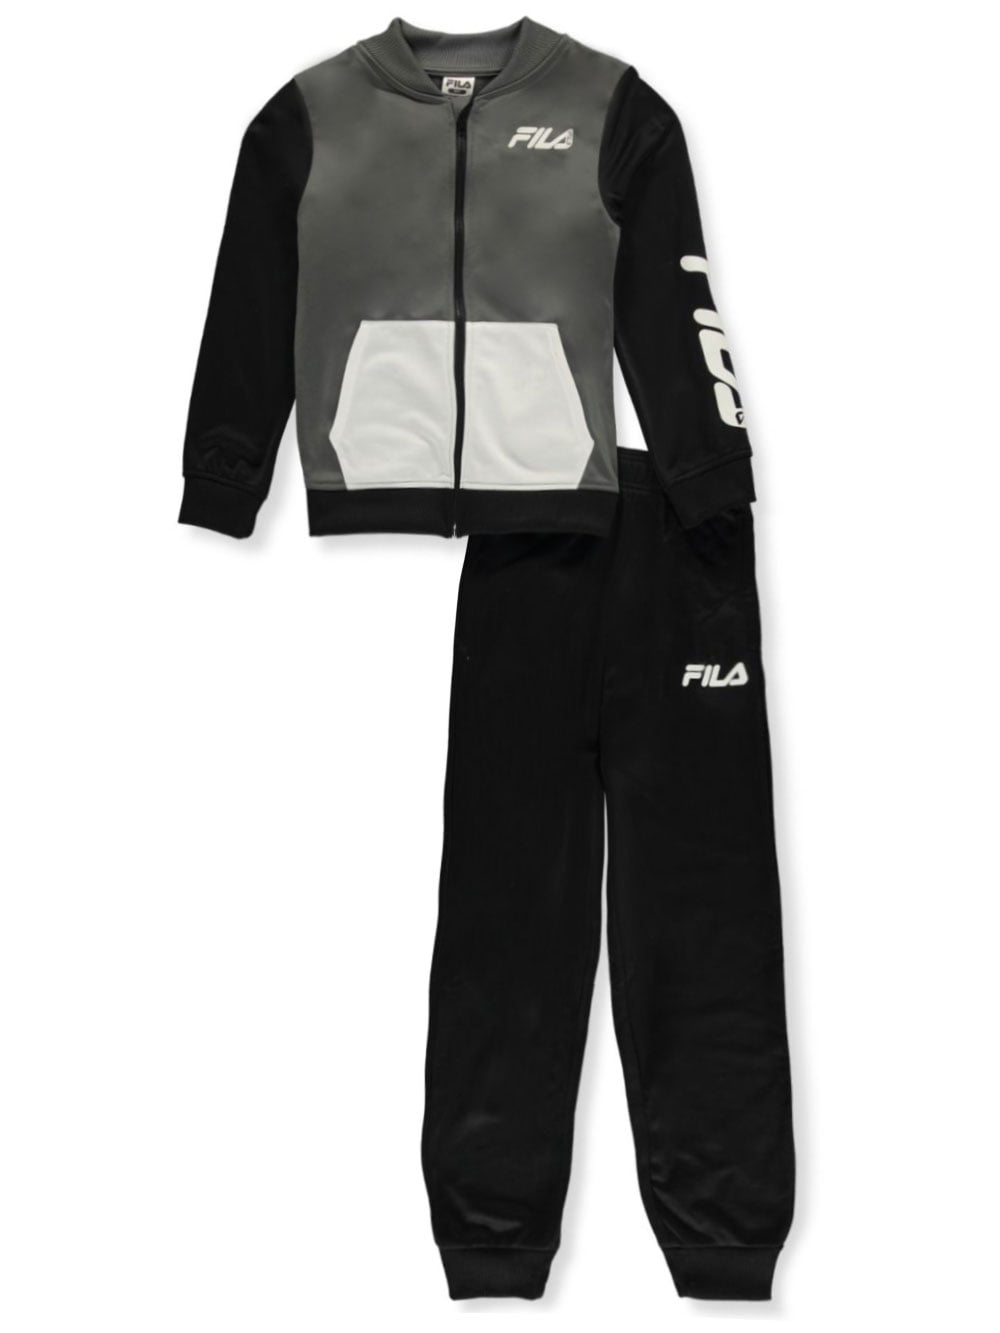 Reebok Boys Colorblocked 2-Piece Sweatsuit Pants Set Outfit